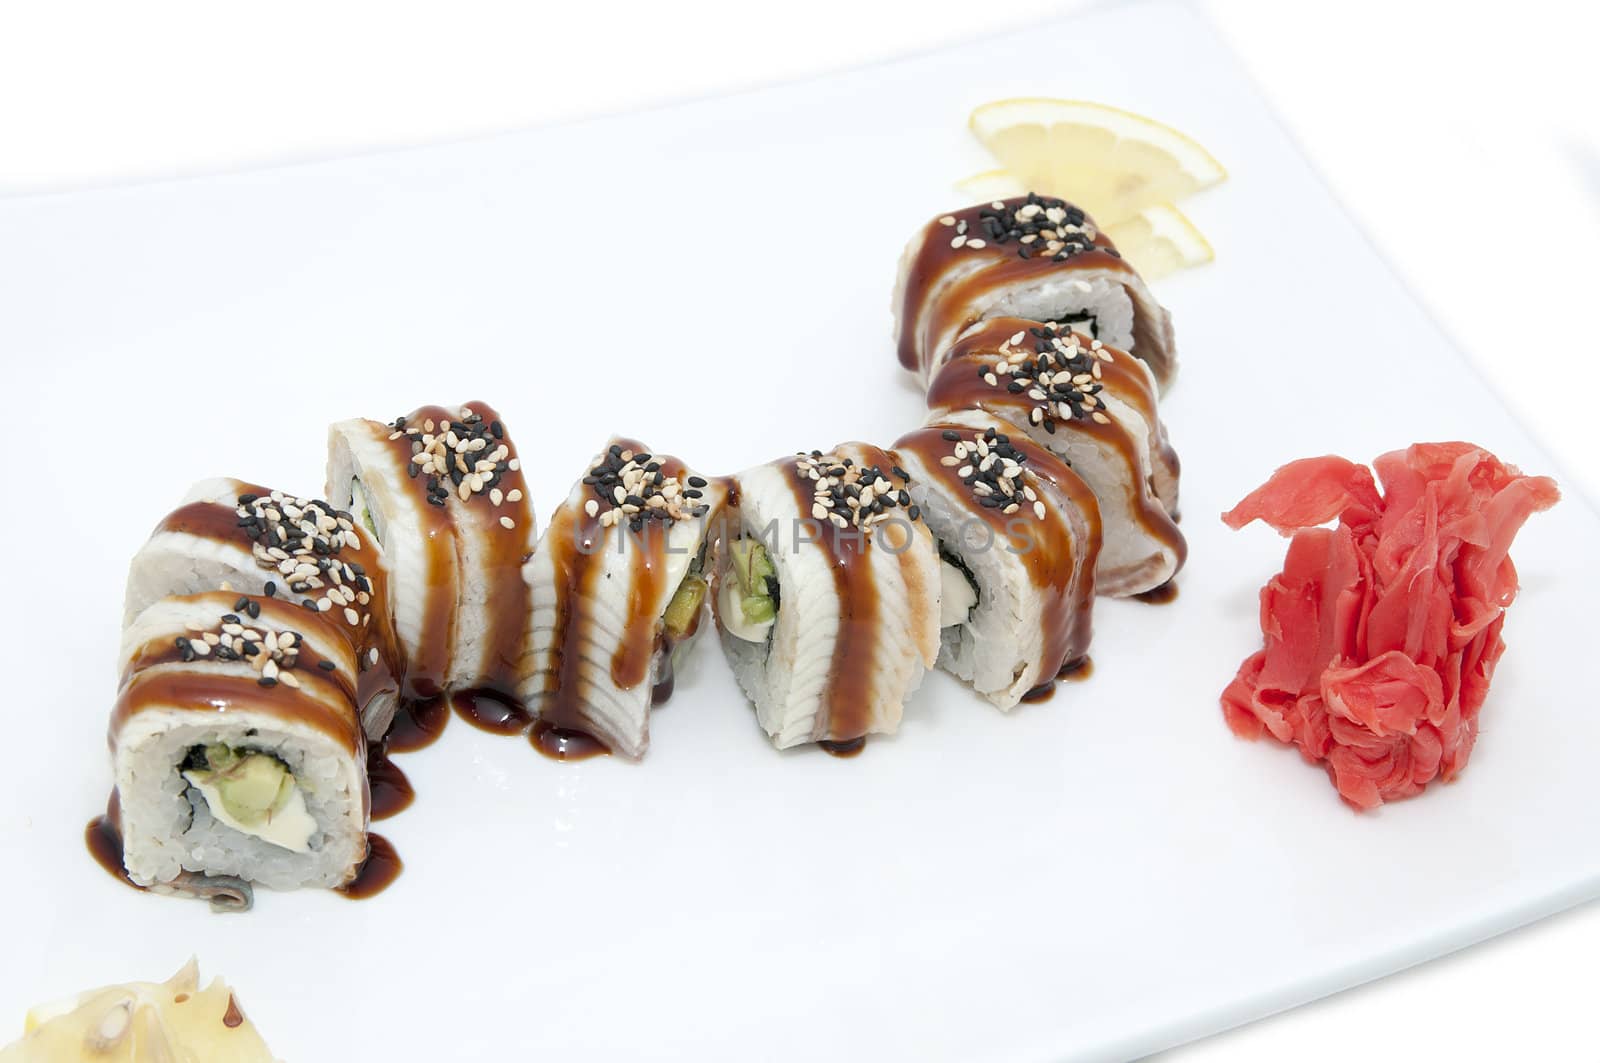 Japanese sushi fish and seafood on white background